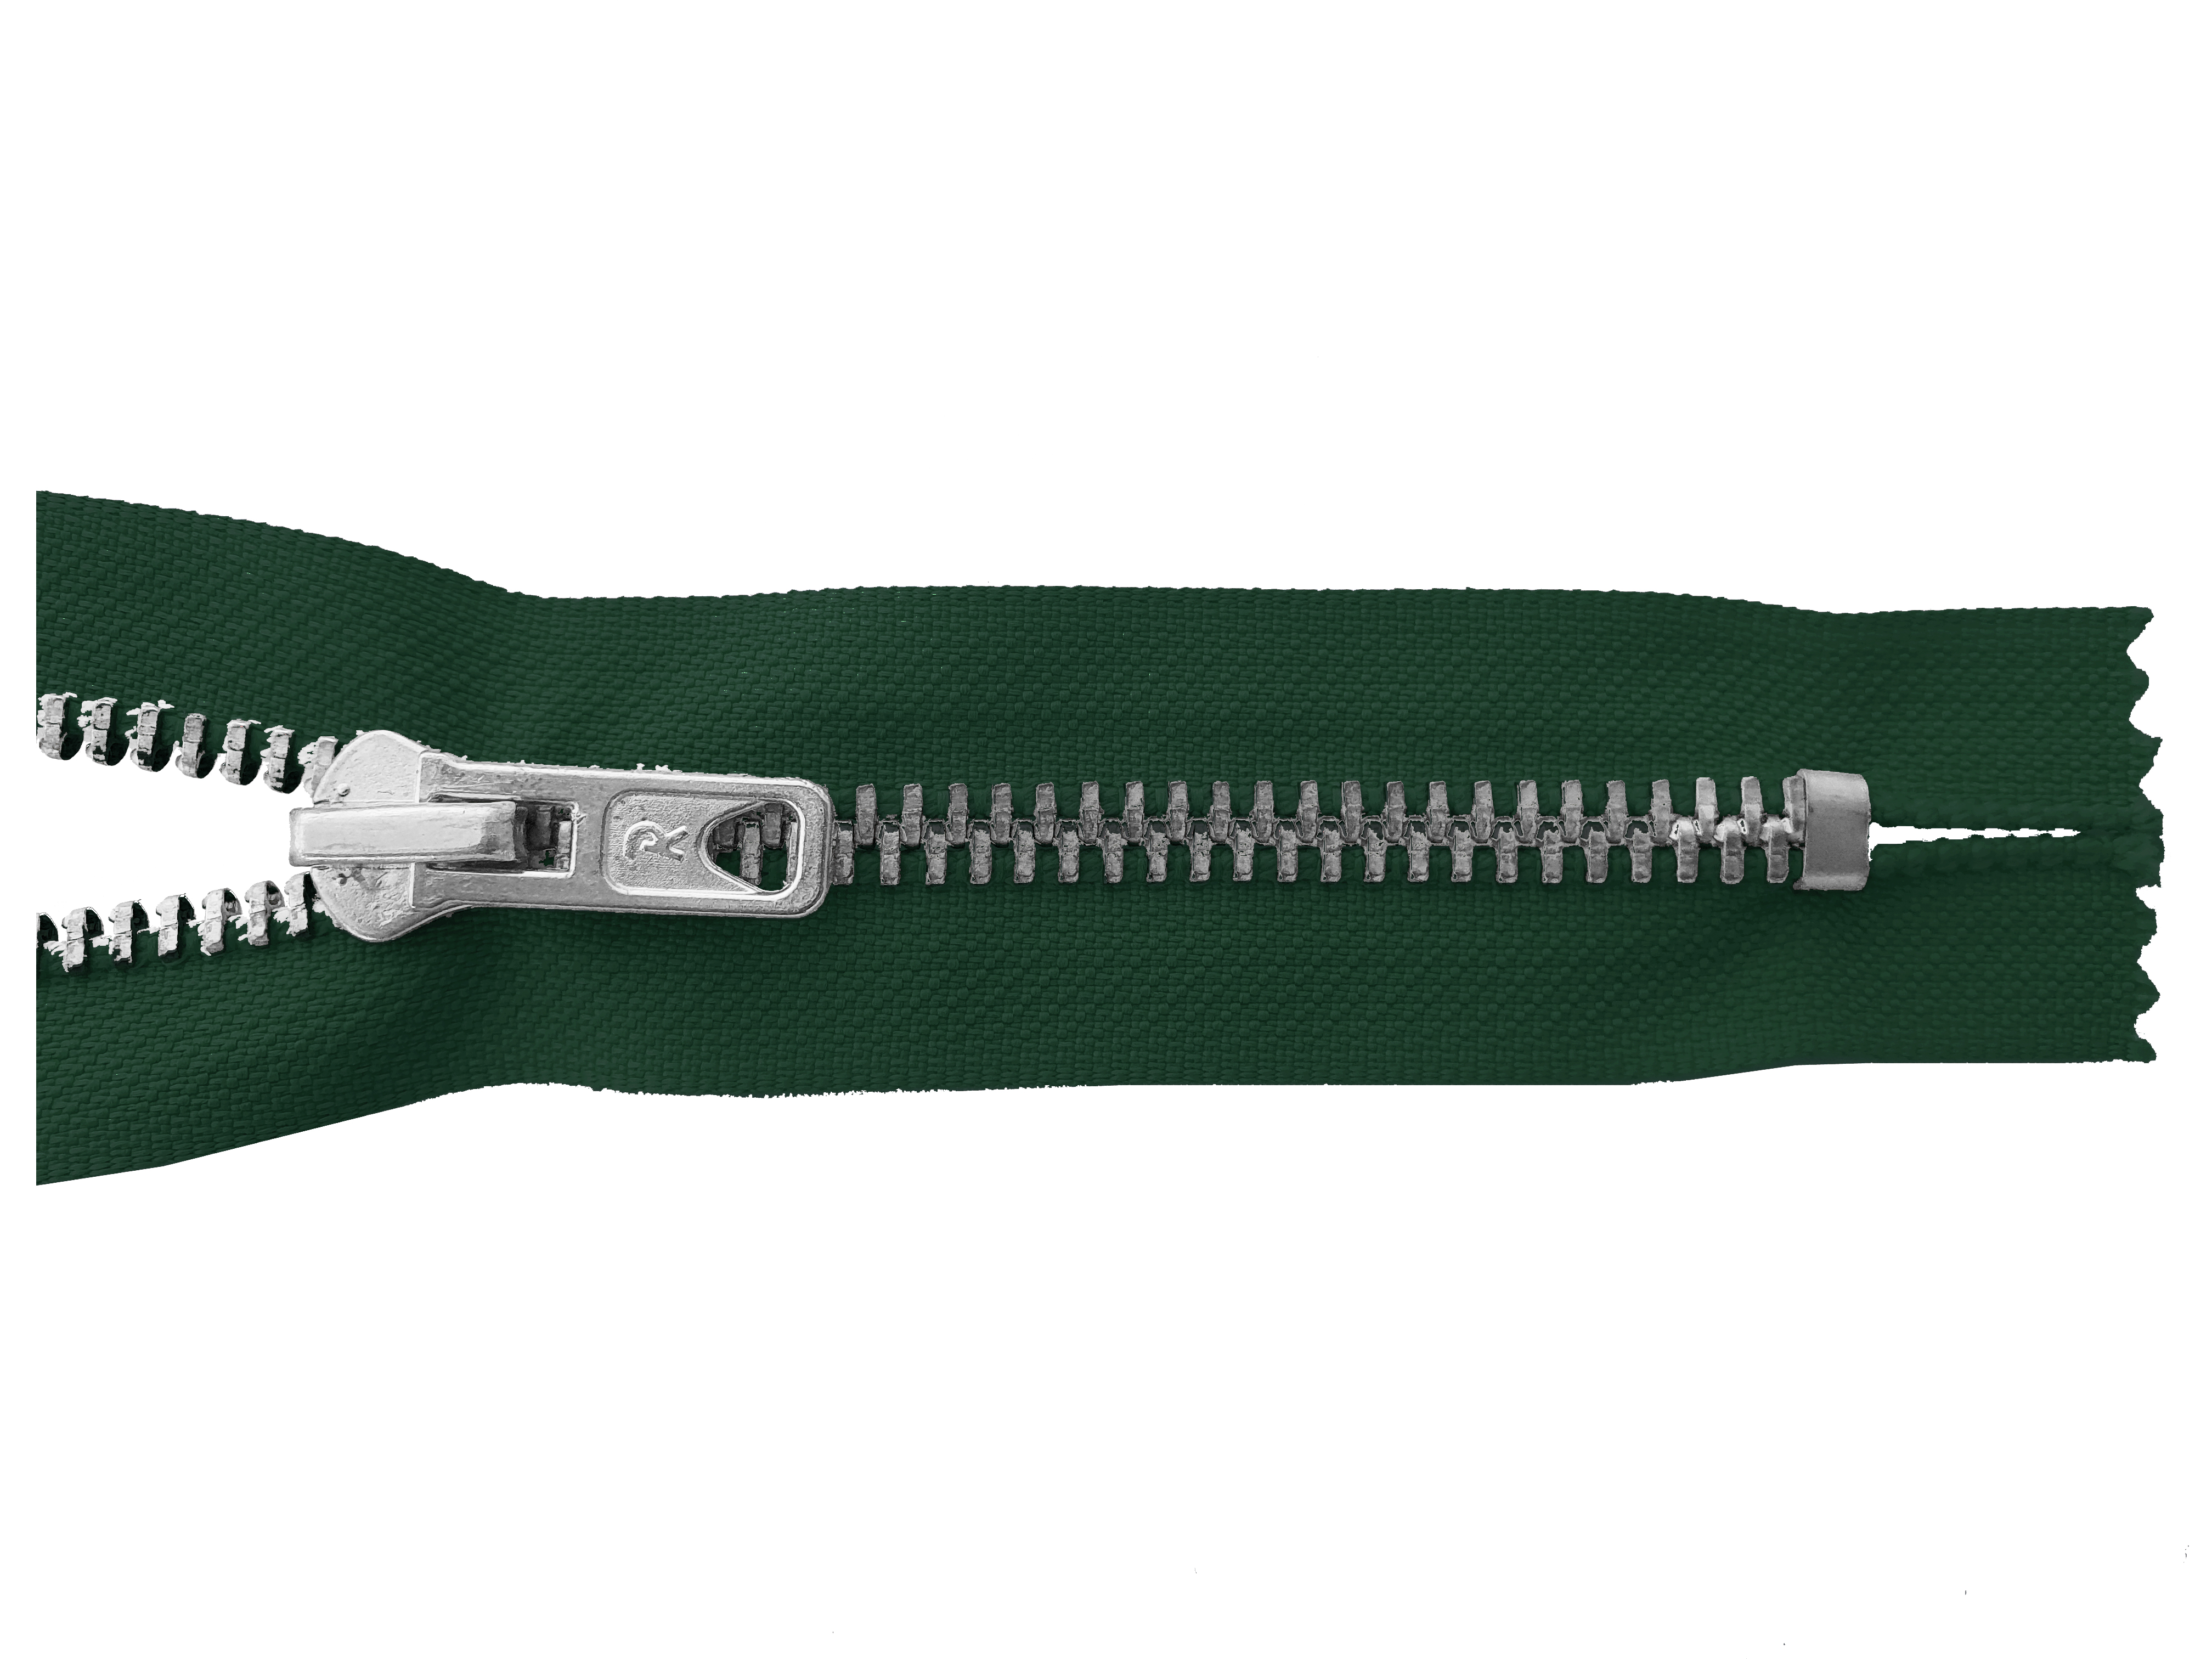 Reißverschluss 16cm, nicht teilbar, Metall silberf. breit, dunkelgrün, hochwertiger Marken-Reißverschluss von Rubi/Barcelona